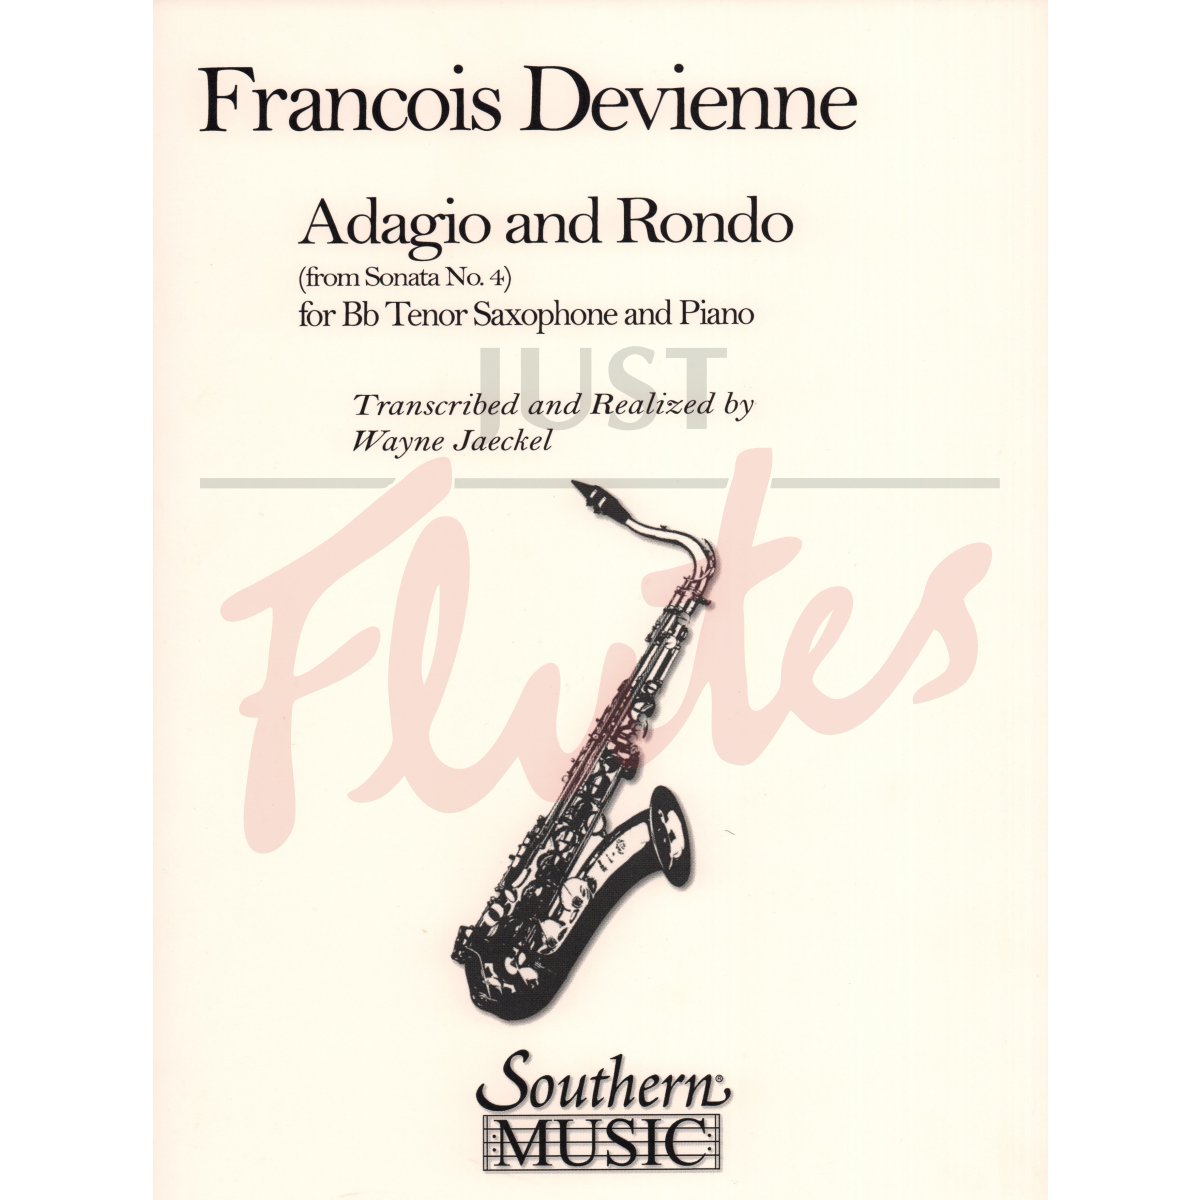 Adagio and Rondo from Sonata No. 4 for Tenor Saxophone and Piano